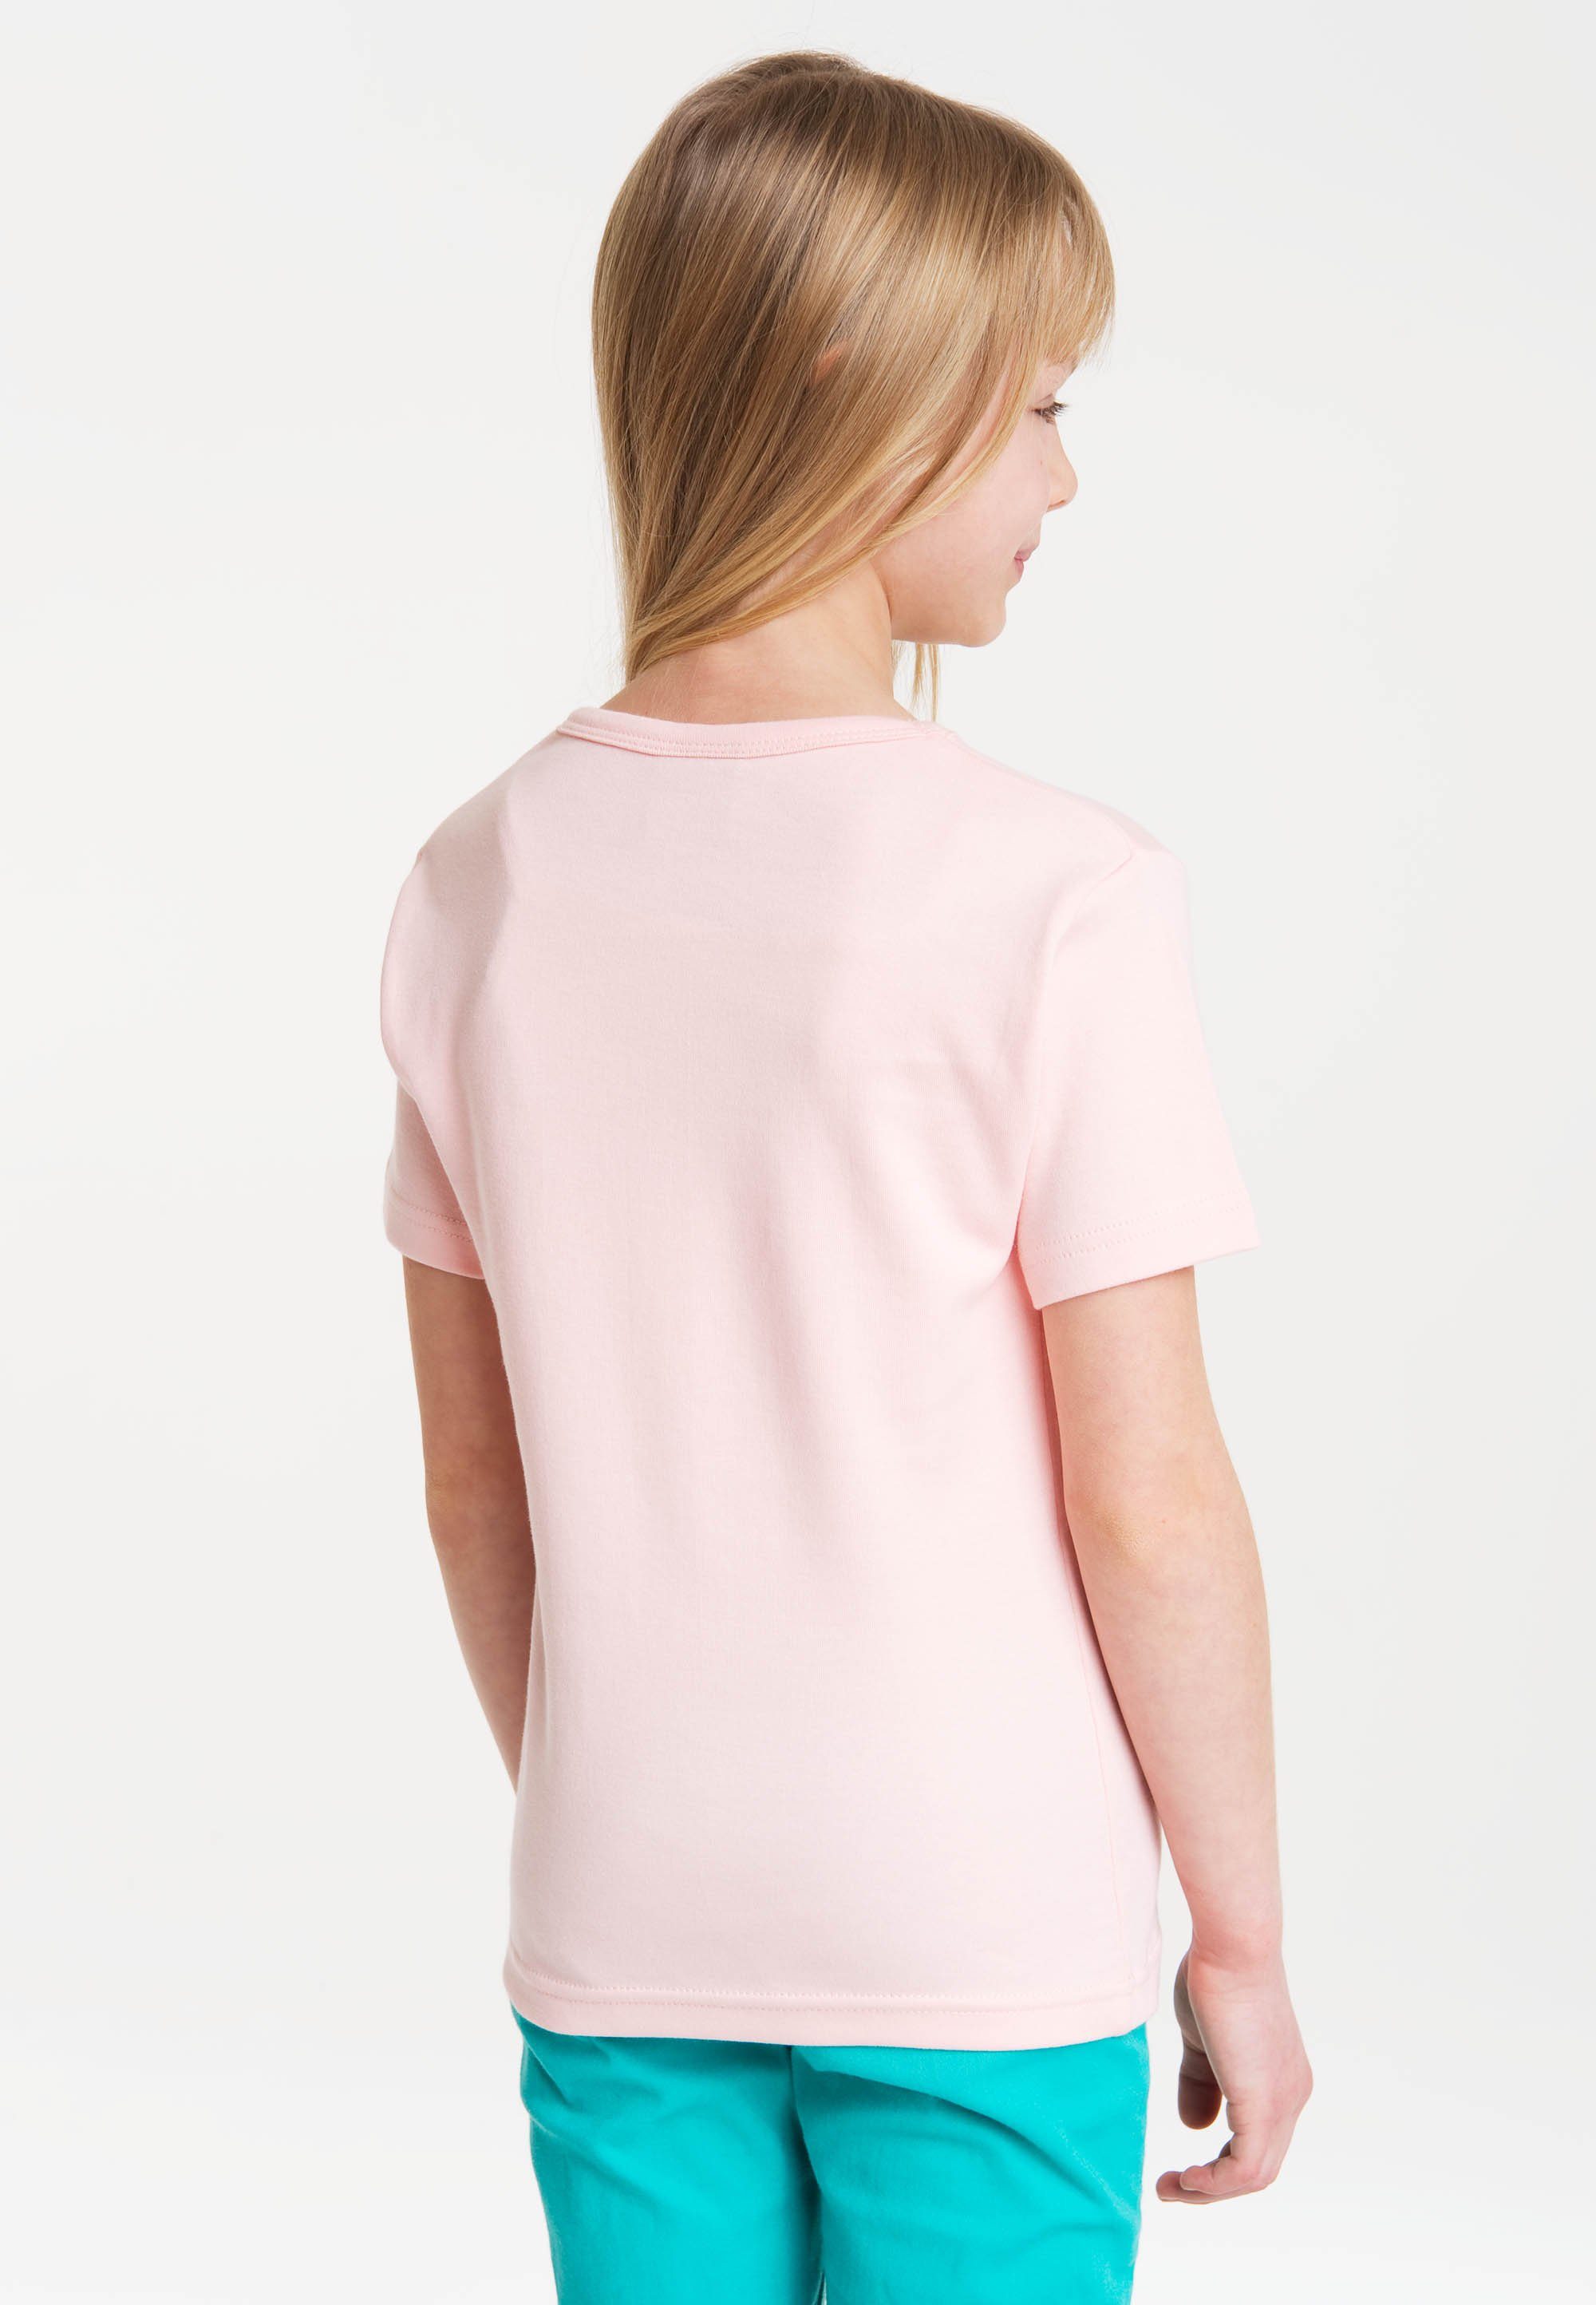 rosa T-Shirt mit - Looney Tweety Tunes Print LOGOSHIRT niedlichem